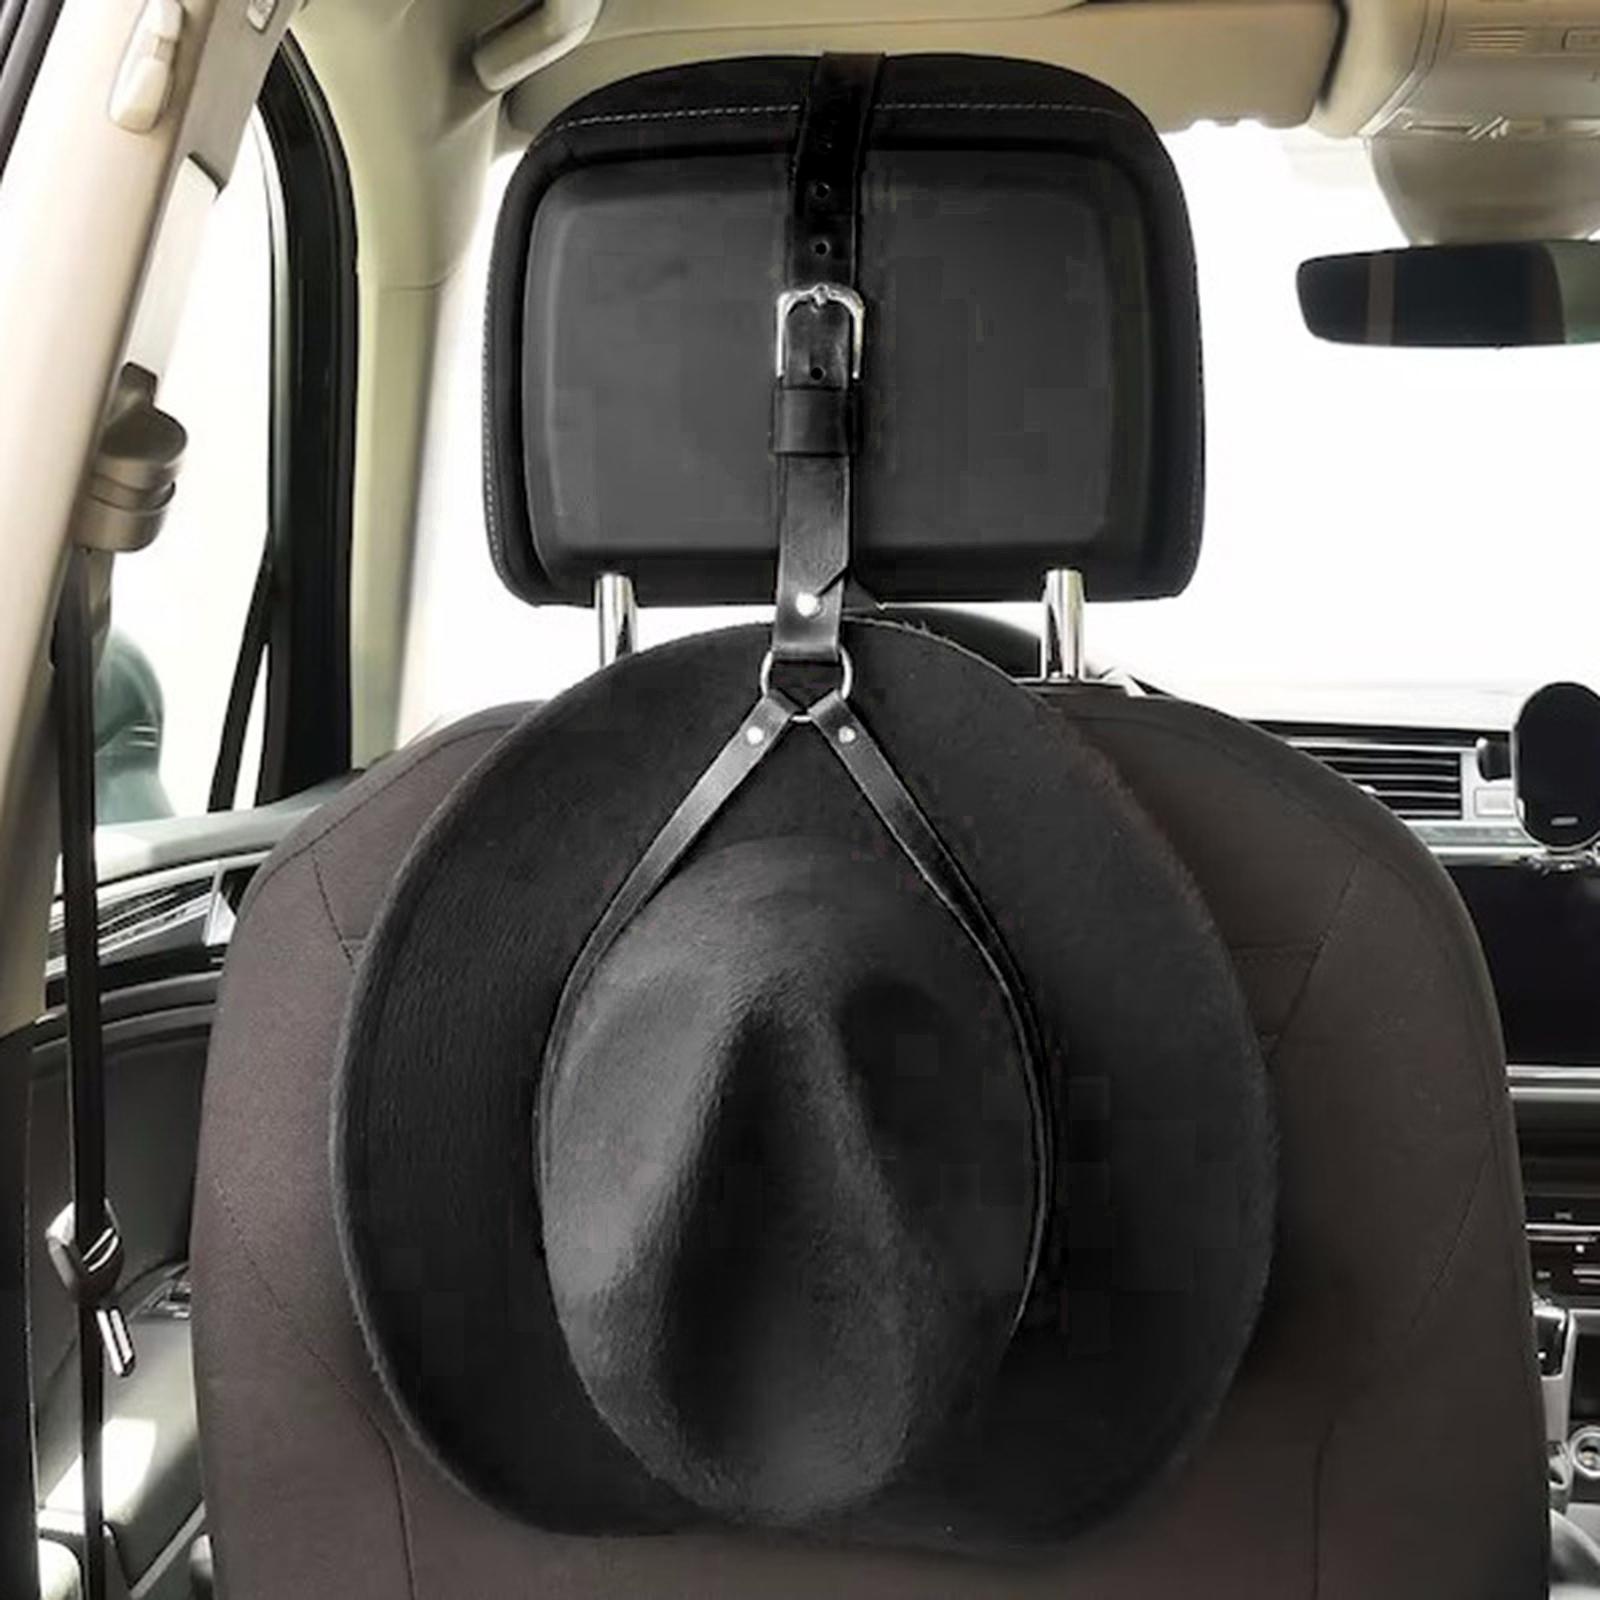 Car Cowboy Hat Holder Rack Universal Keep Hat Shape Adjustable Hat Organizer